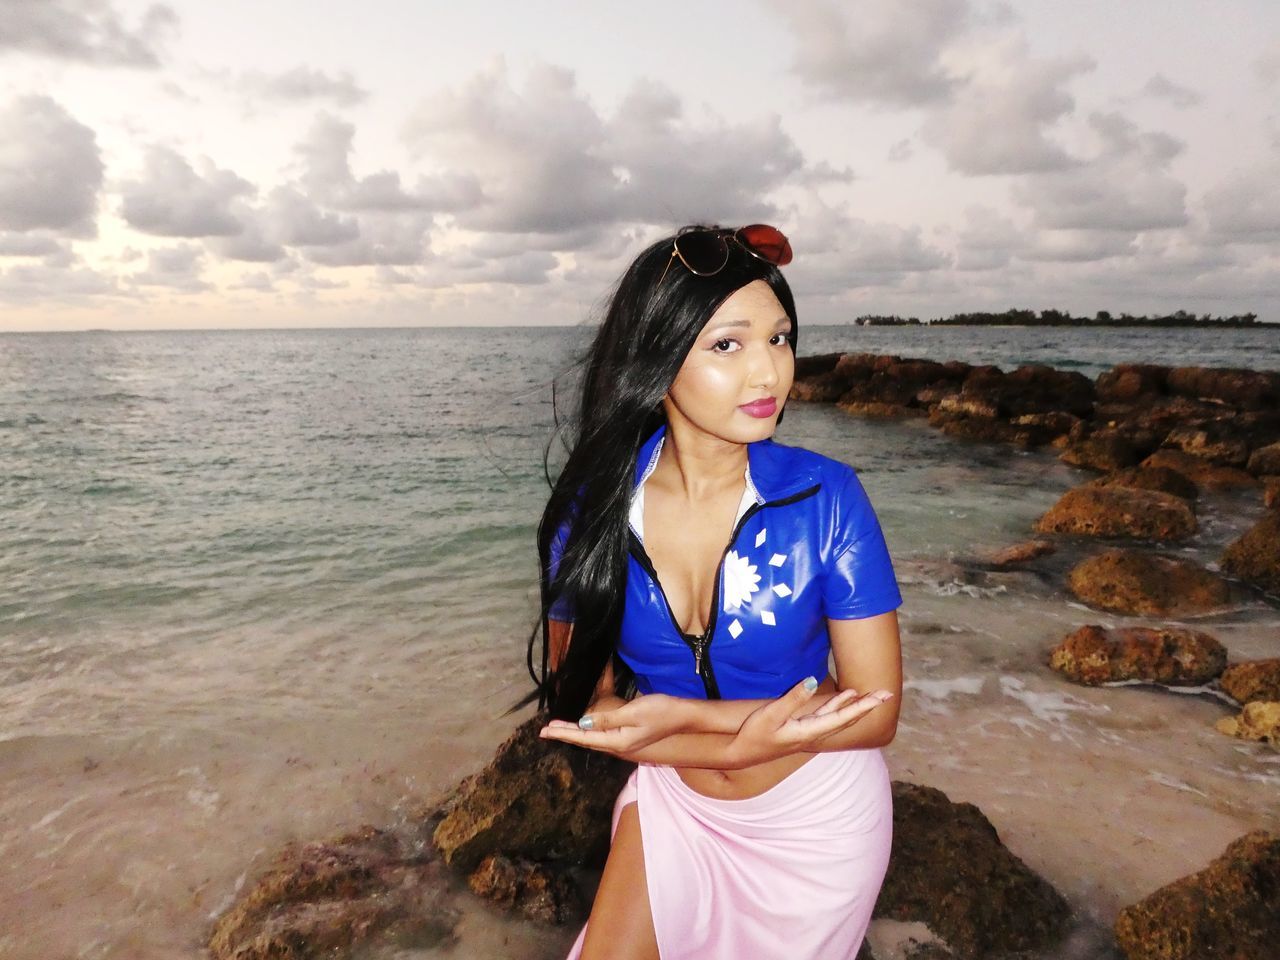 Nico Robin OnePiece Onepiececosplay Bahamas Wave Portrait Beautiful Woman Sea Beauty Beach Water Females Sunset Women Coastline Seascape Rock Formation Shore Coast